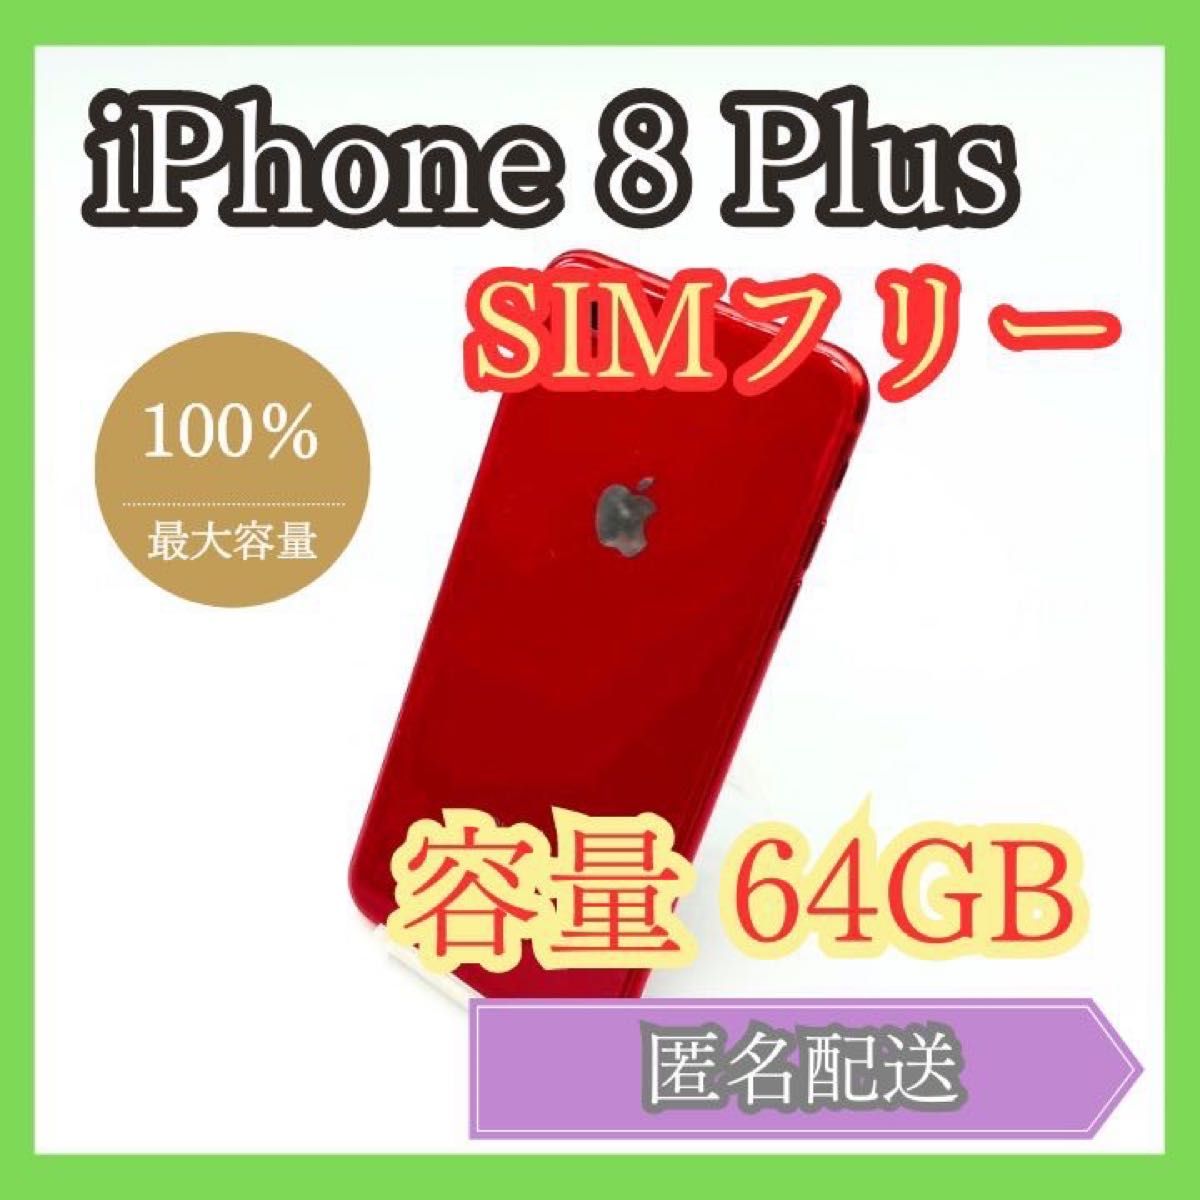 iPhone8 Plus SIMフリー 64GB バッテリー新品 初期化済み